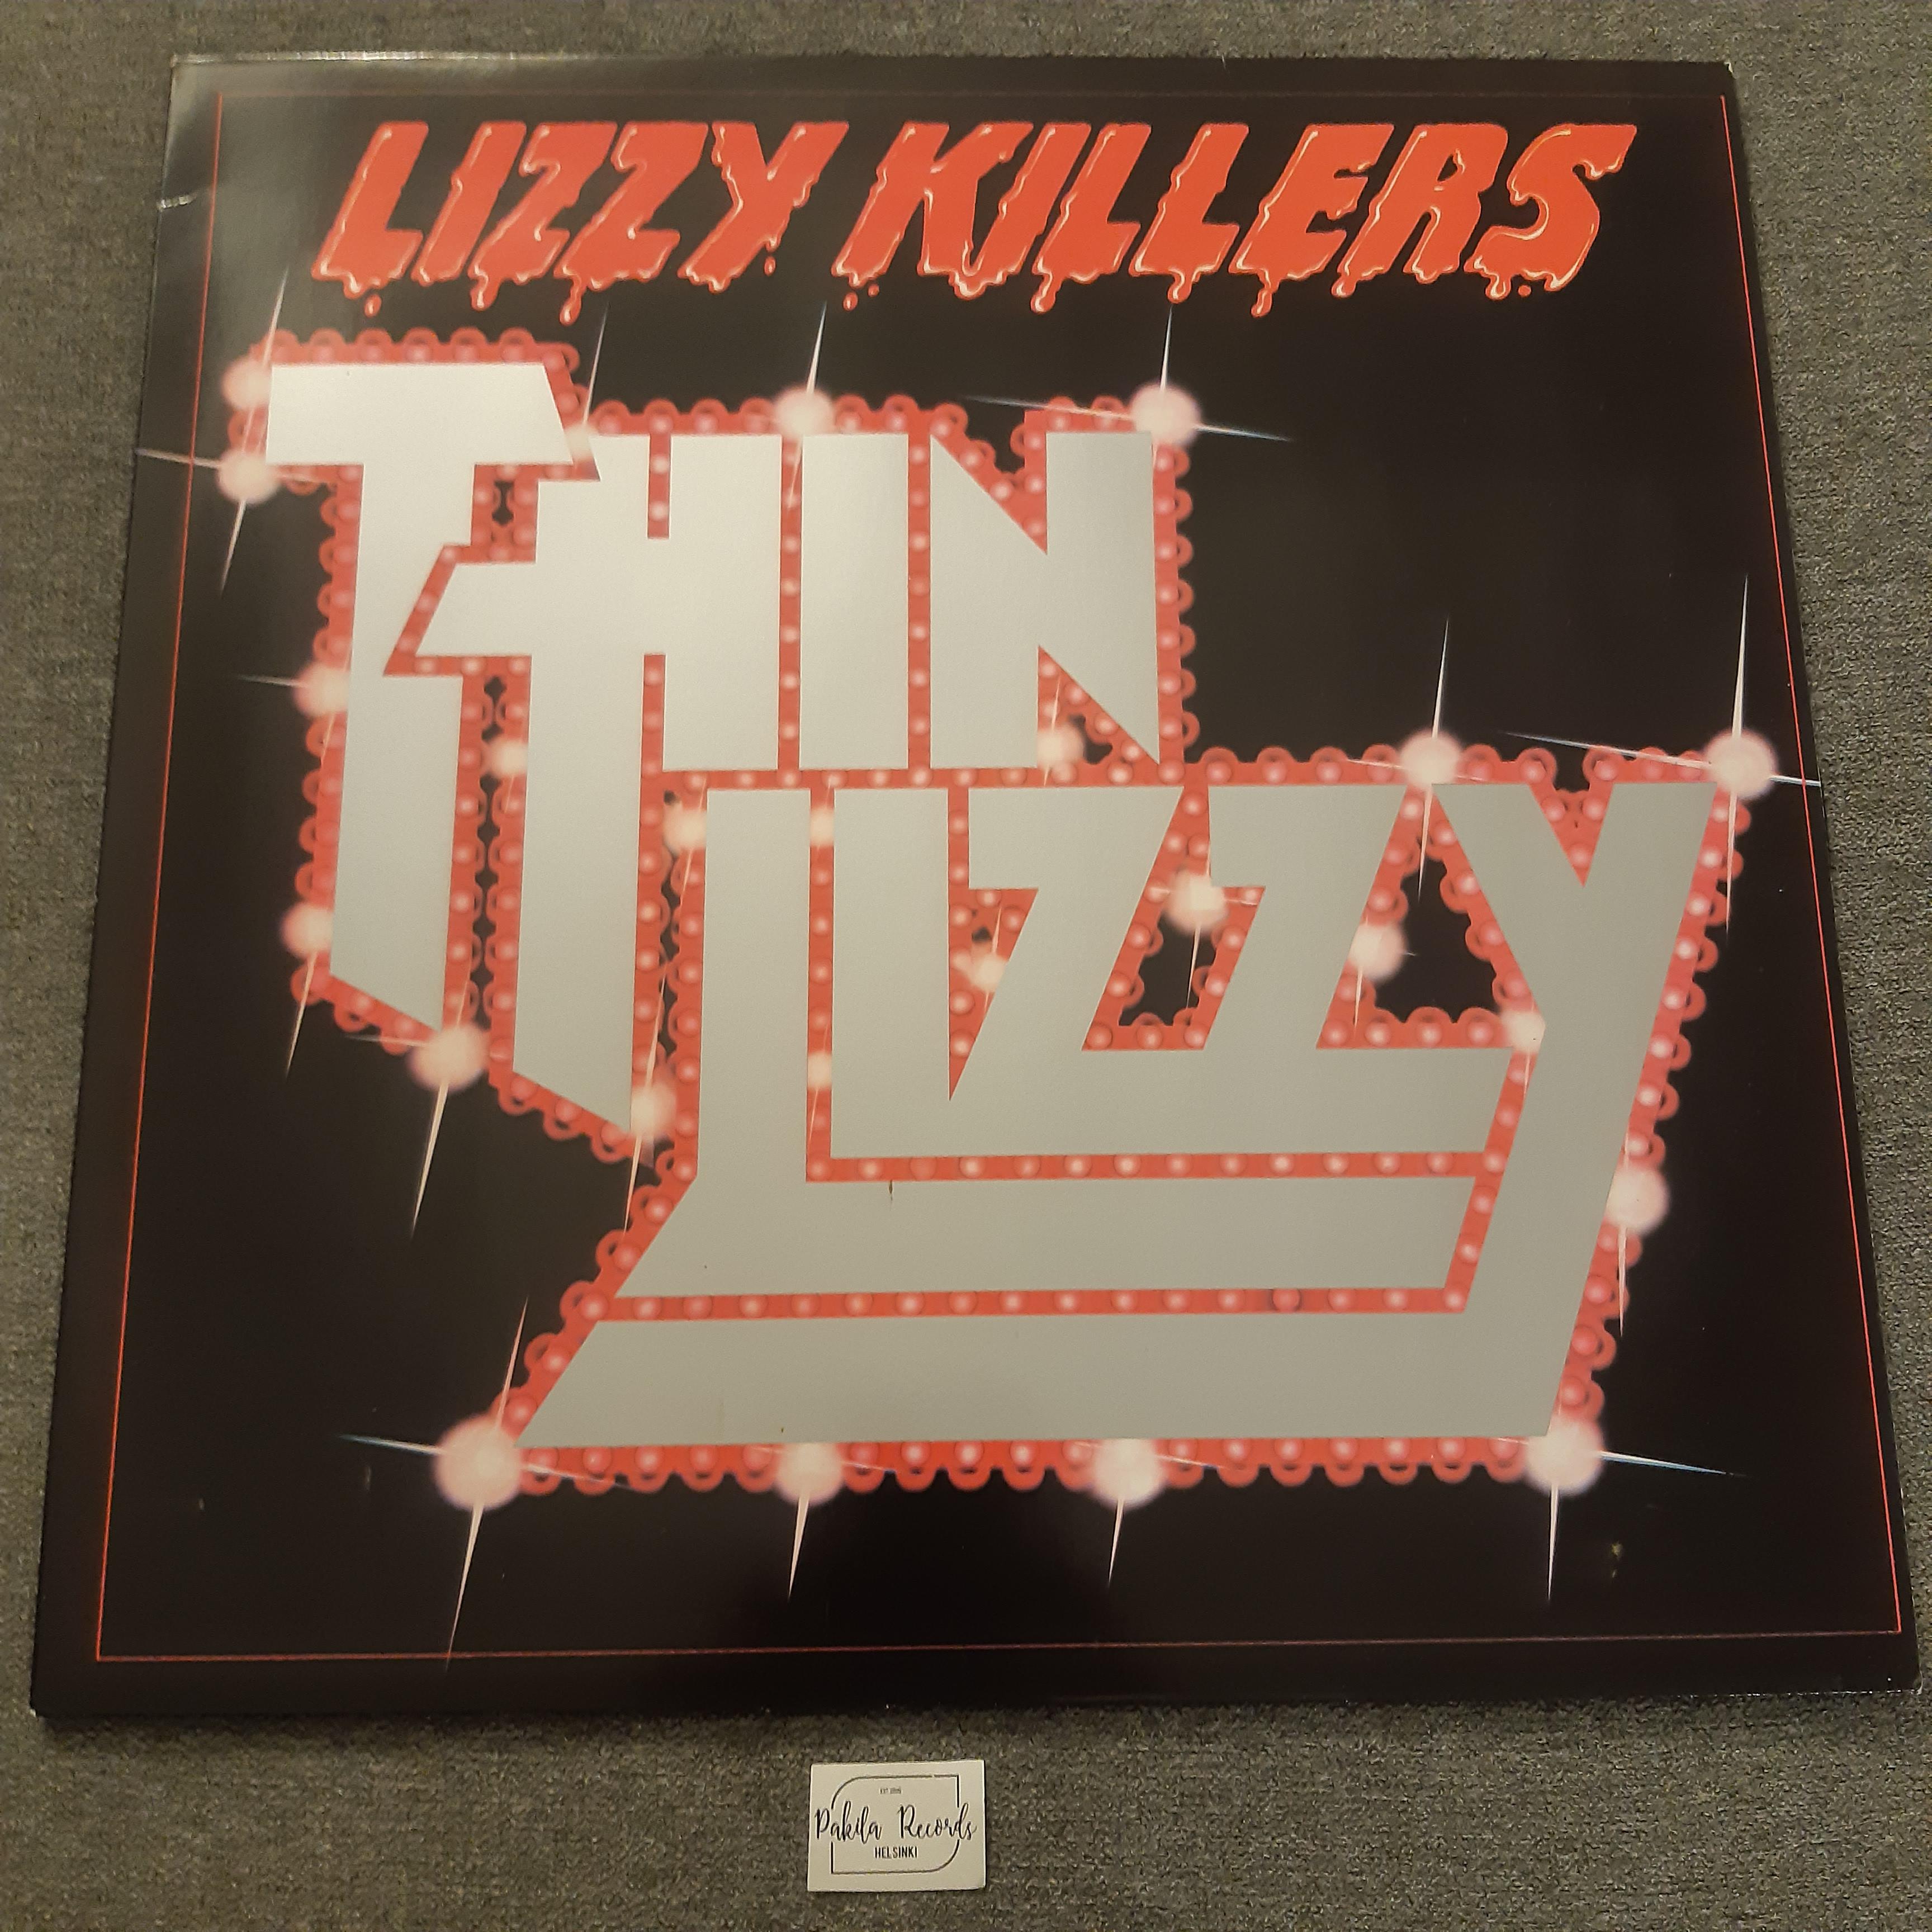 Thin Lizzy - Lizzy Killers - LP (käytetty)